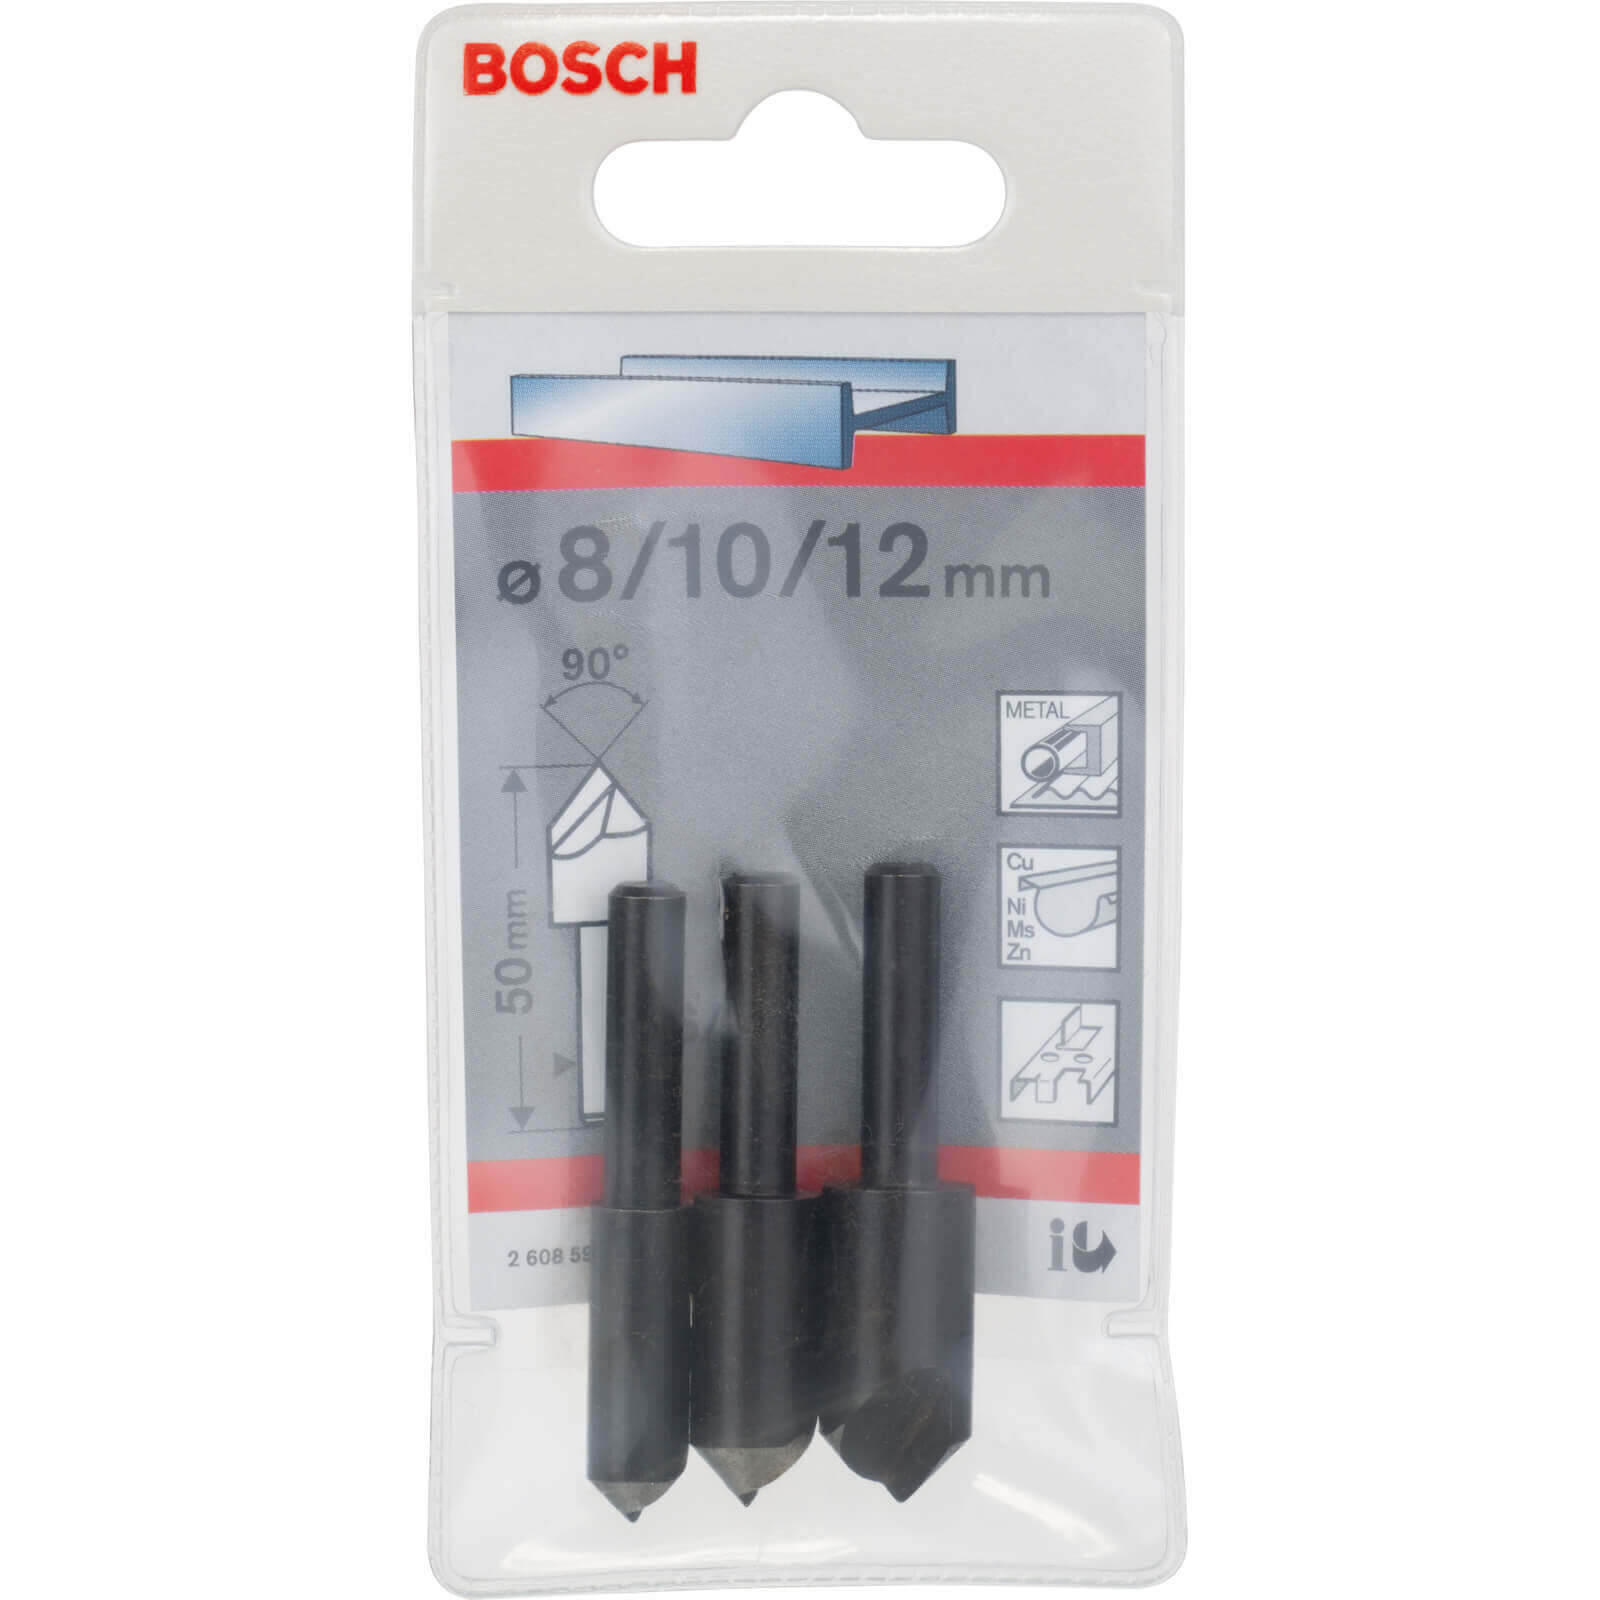 Photo of Bosch 3 Piece Countersink Bit Set